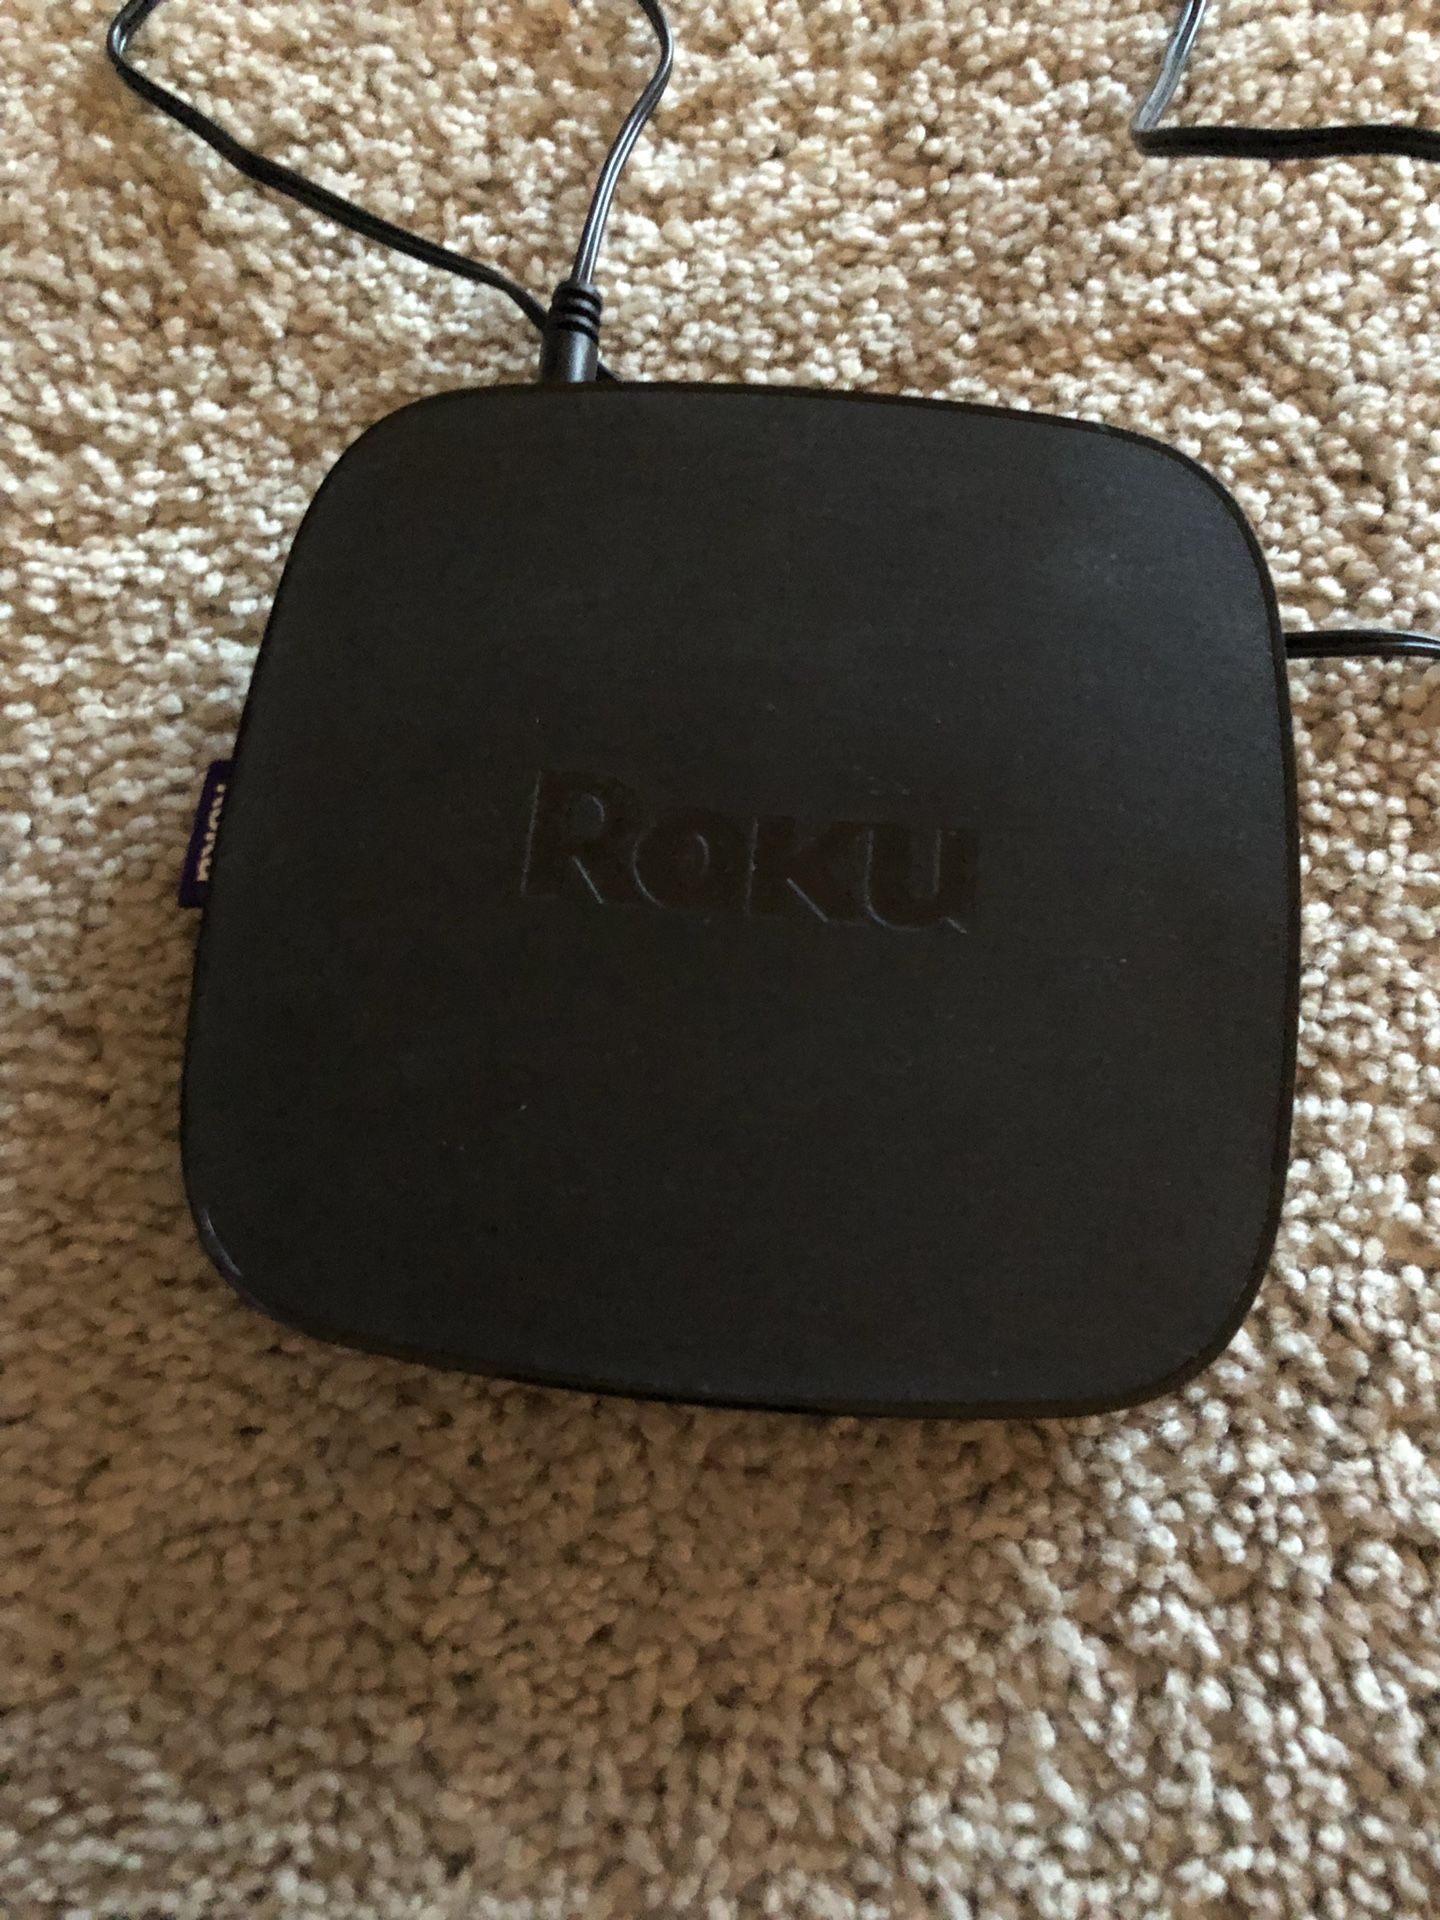 Roku and remote